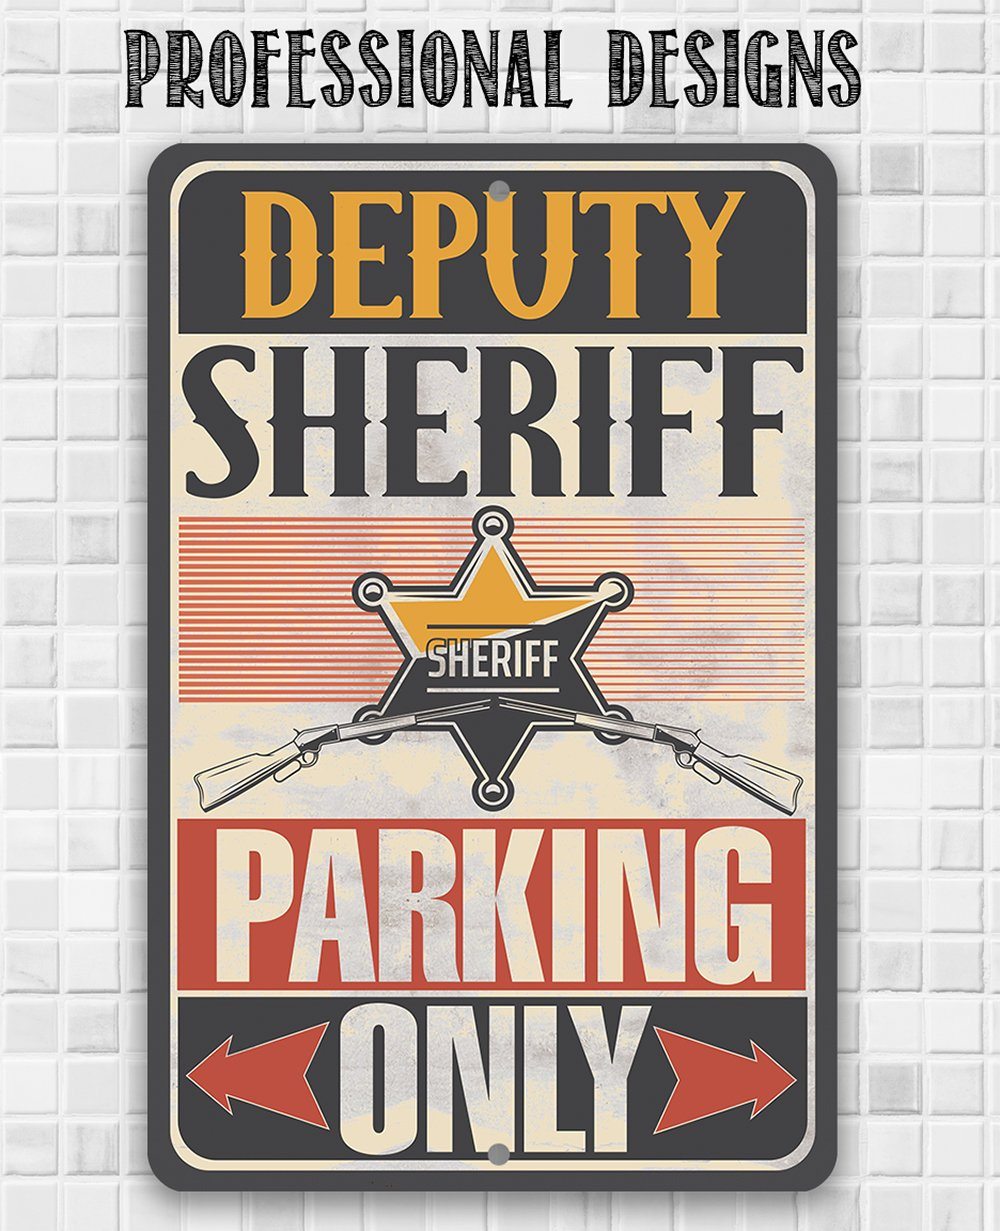 Deputy Sheriff Parking Only - Metal Sign | Lone Star Art.